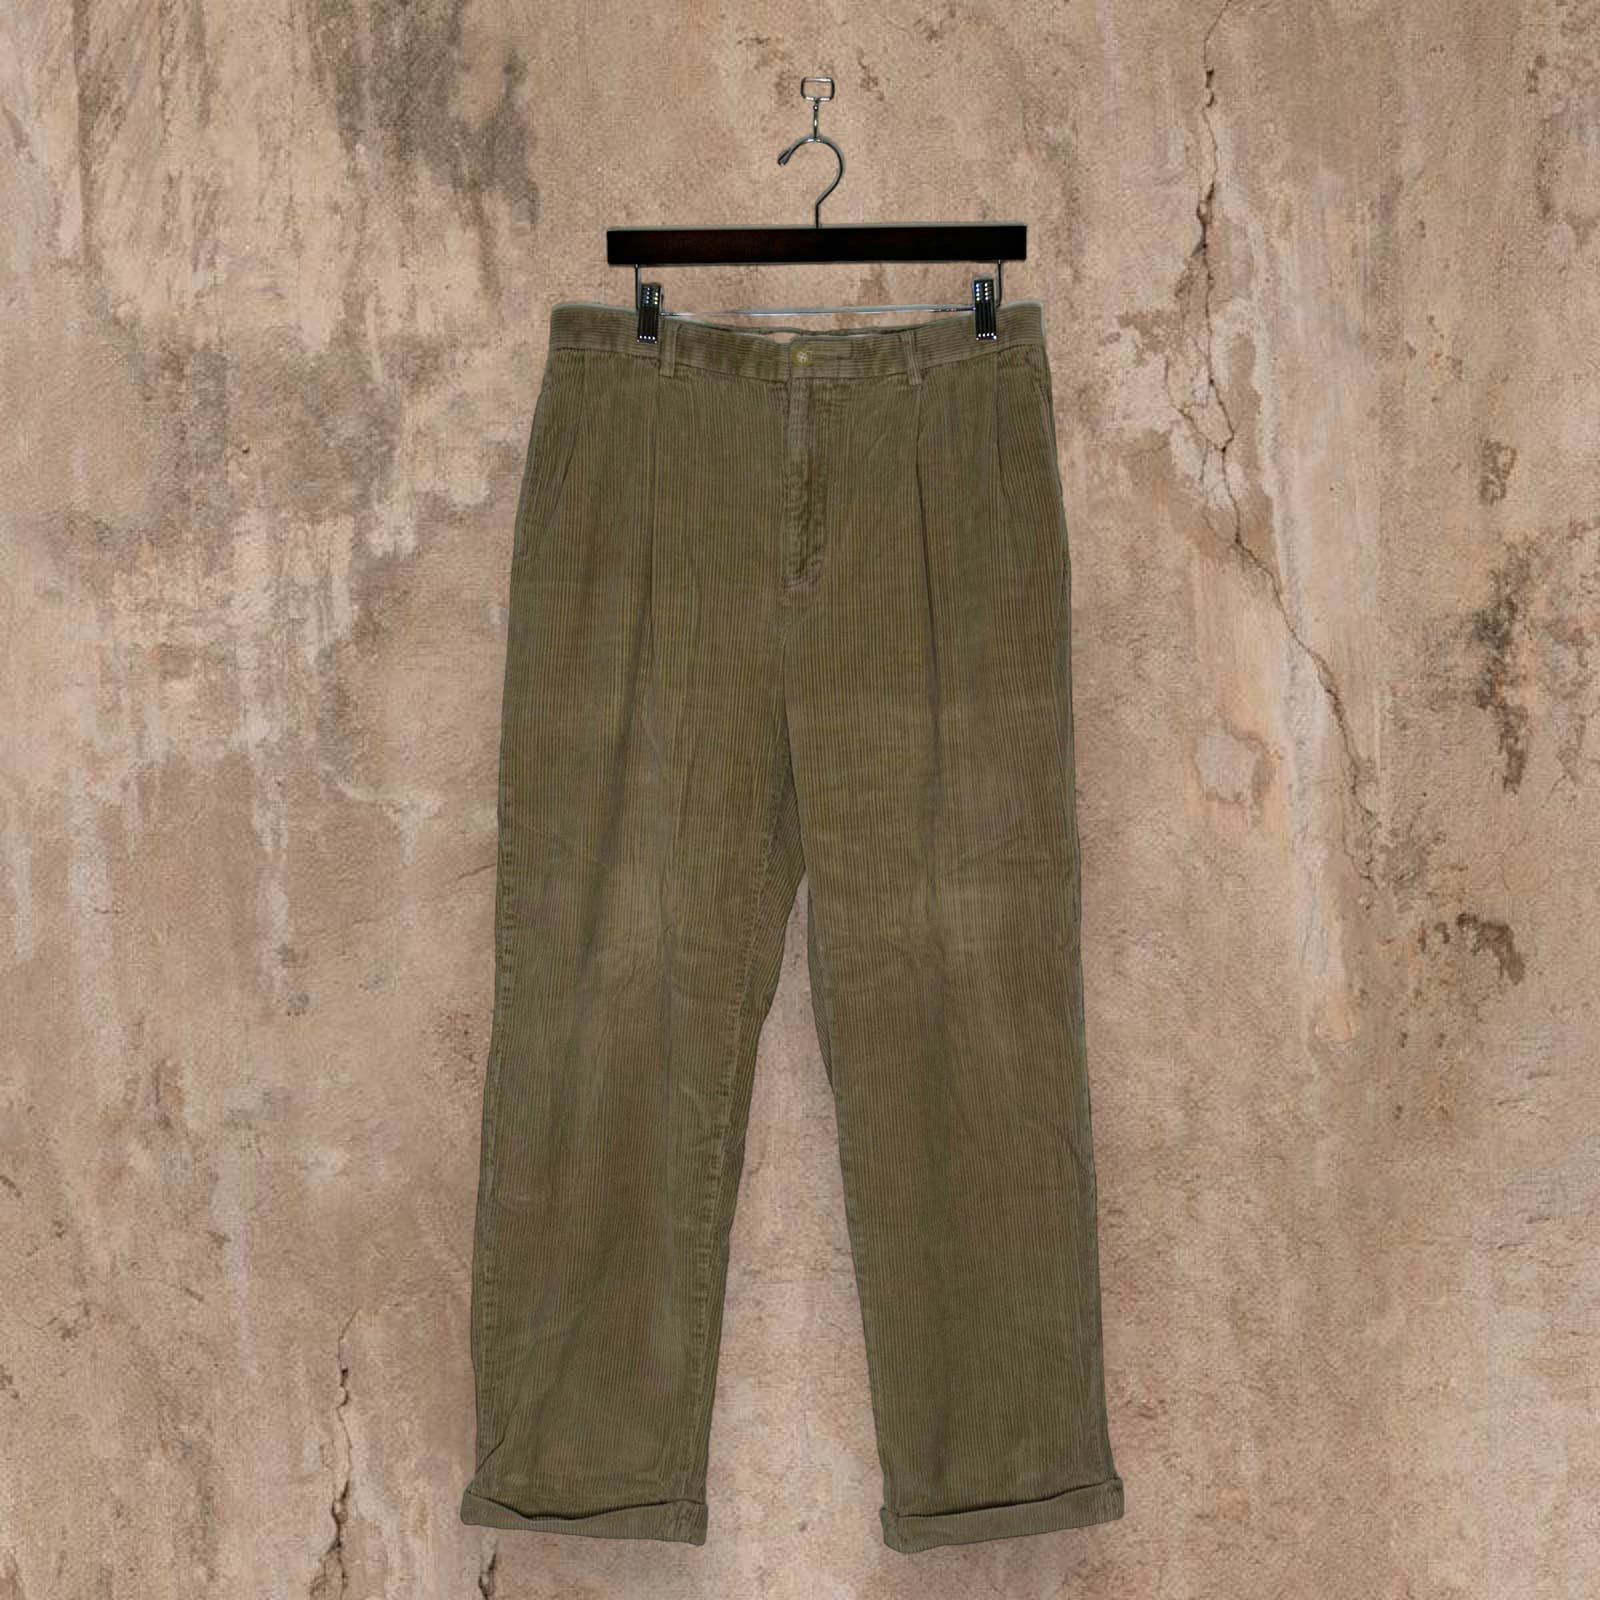 Vintage Vintage Nautica Corduroy Pants Tan Pleated Baggy Fit Y2K Size US 34 / EU 50 - 3 Thumbnail